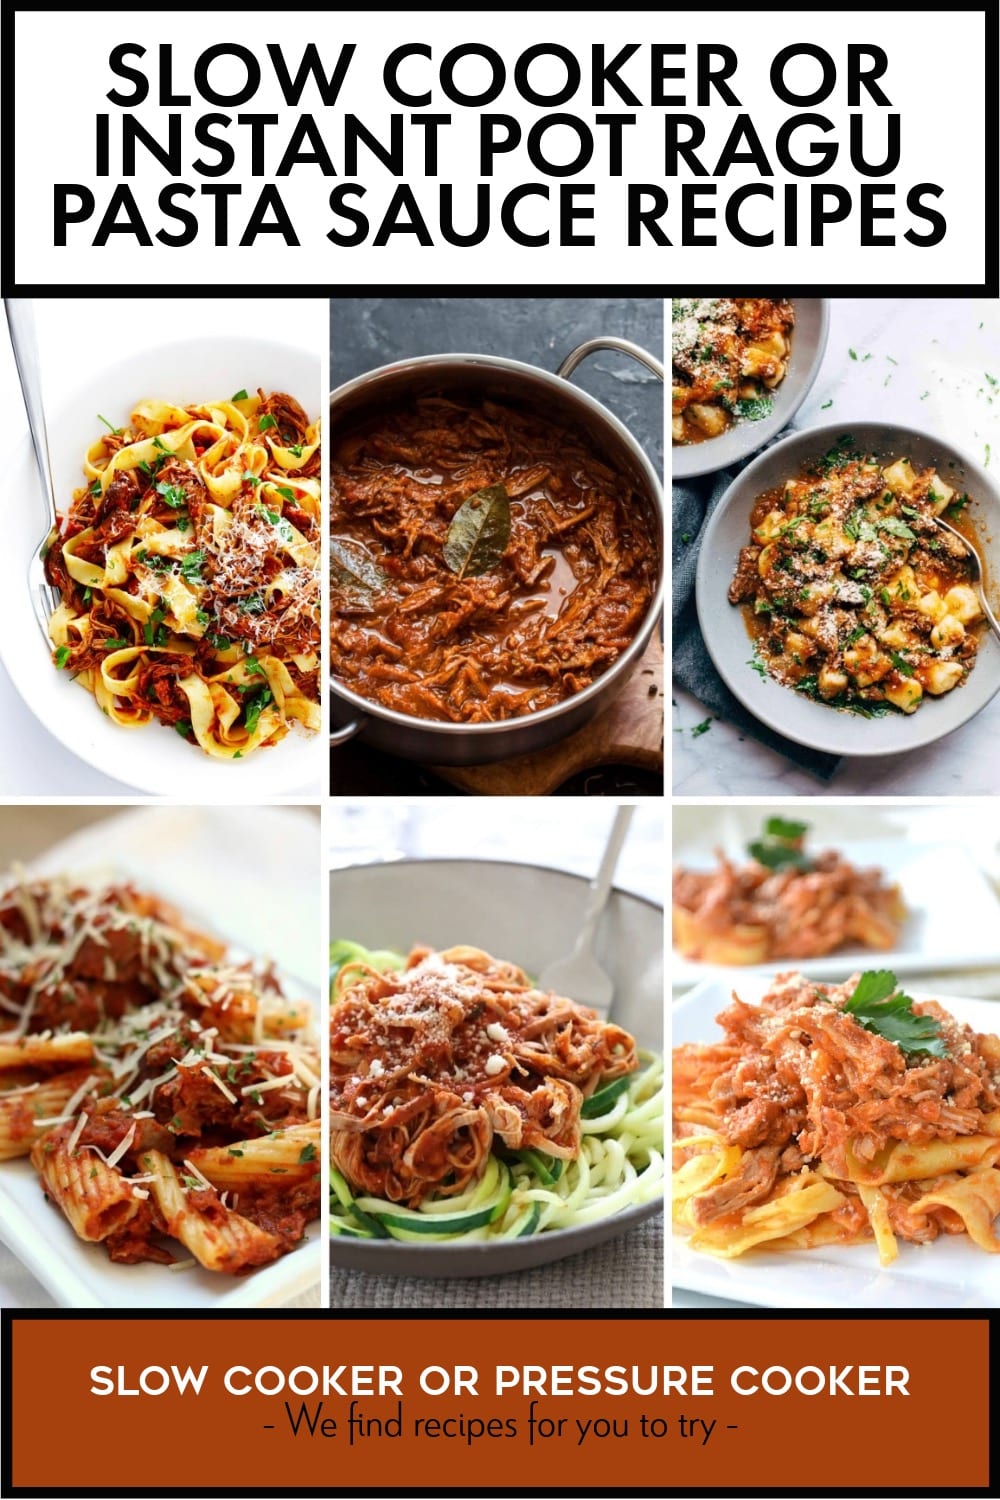 Pinterest image of Slow Cooker or Instant Pot Ragu Pasta Sauce Recipes